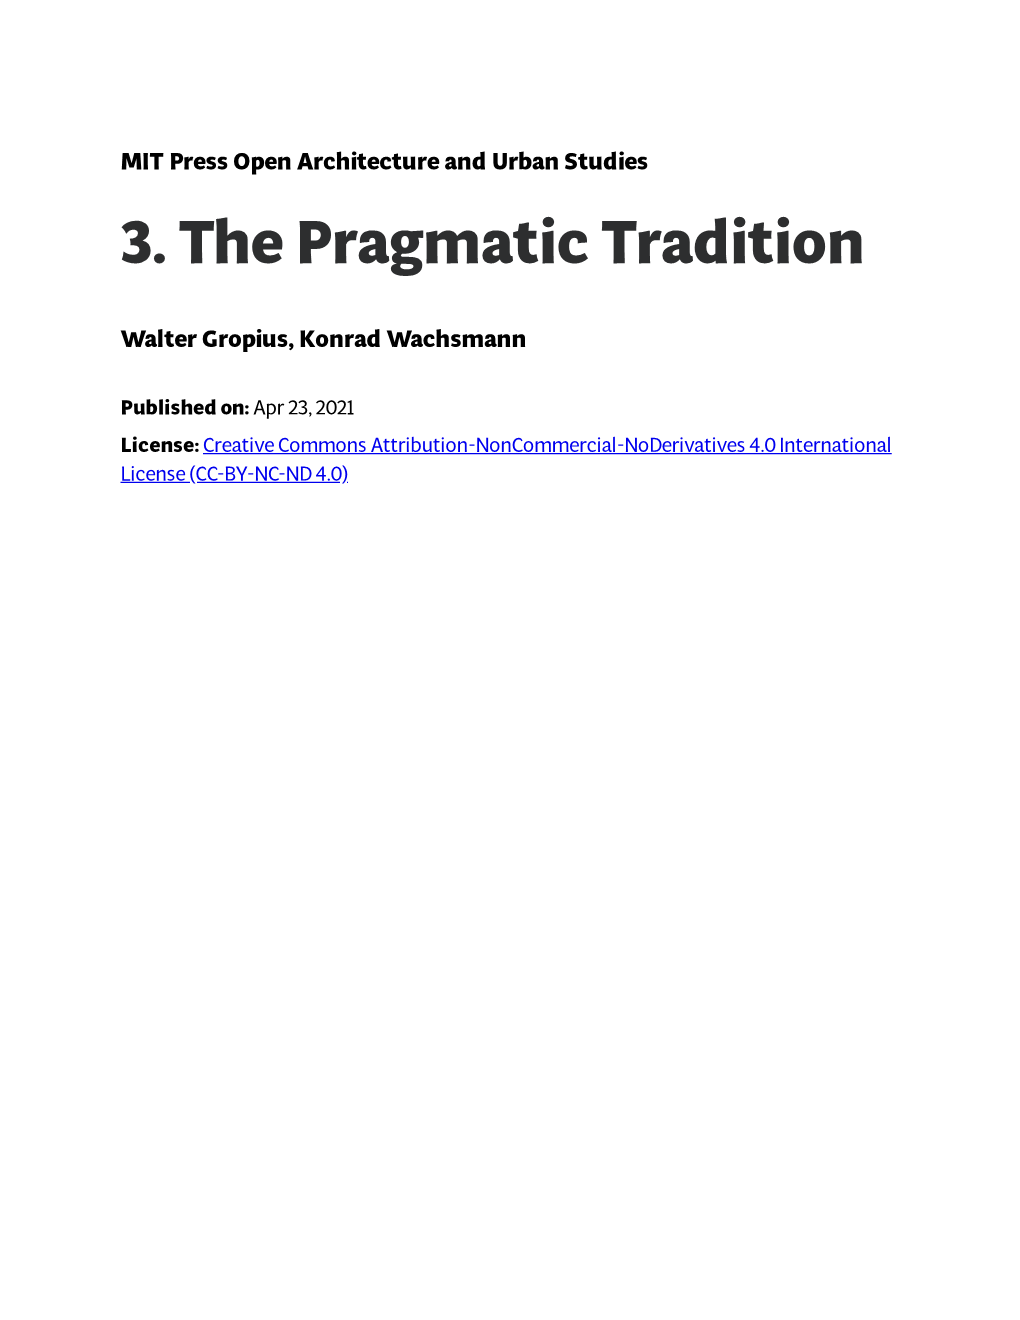 3. the Pragmatic Tradition